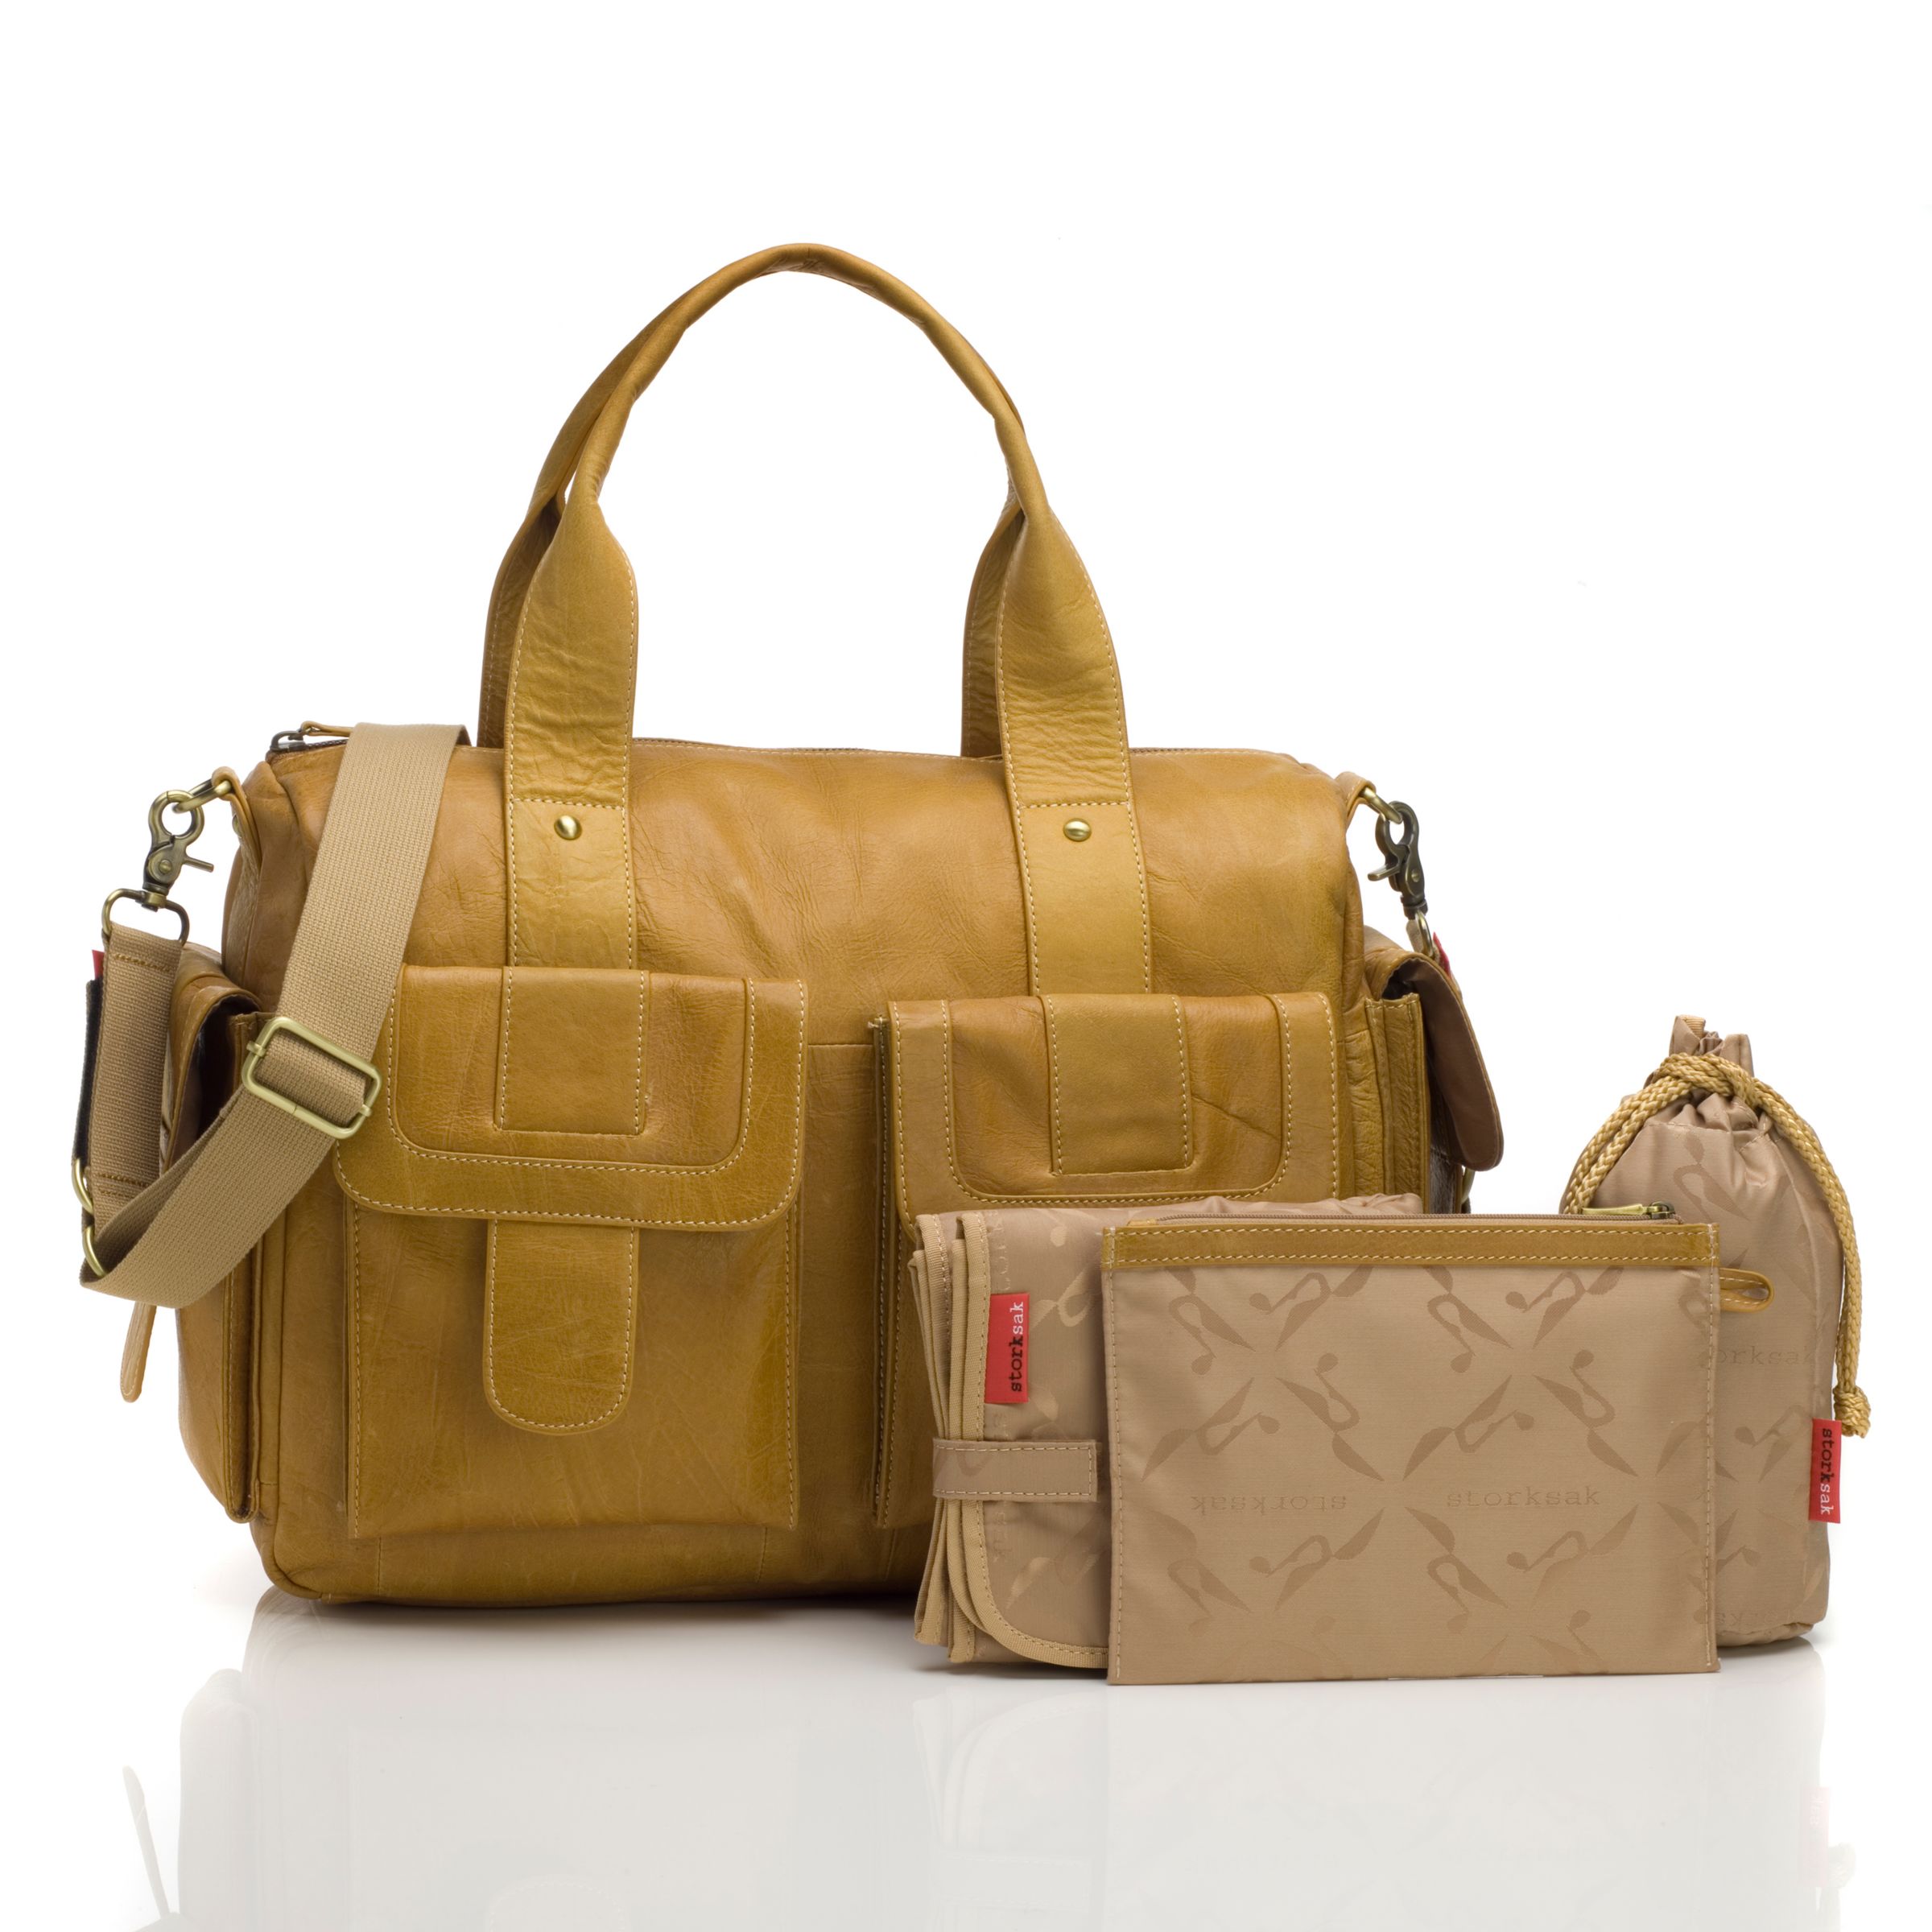 Storksak Sofia Leather Baby Changing Bag, Tan at John Lewis & Partners